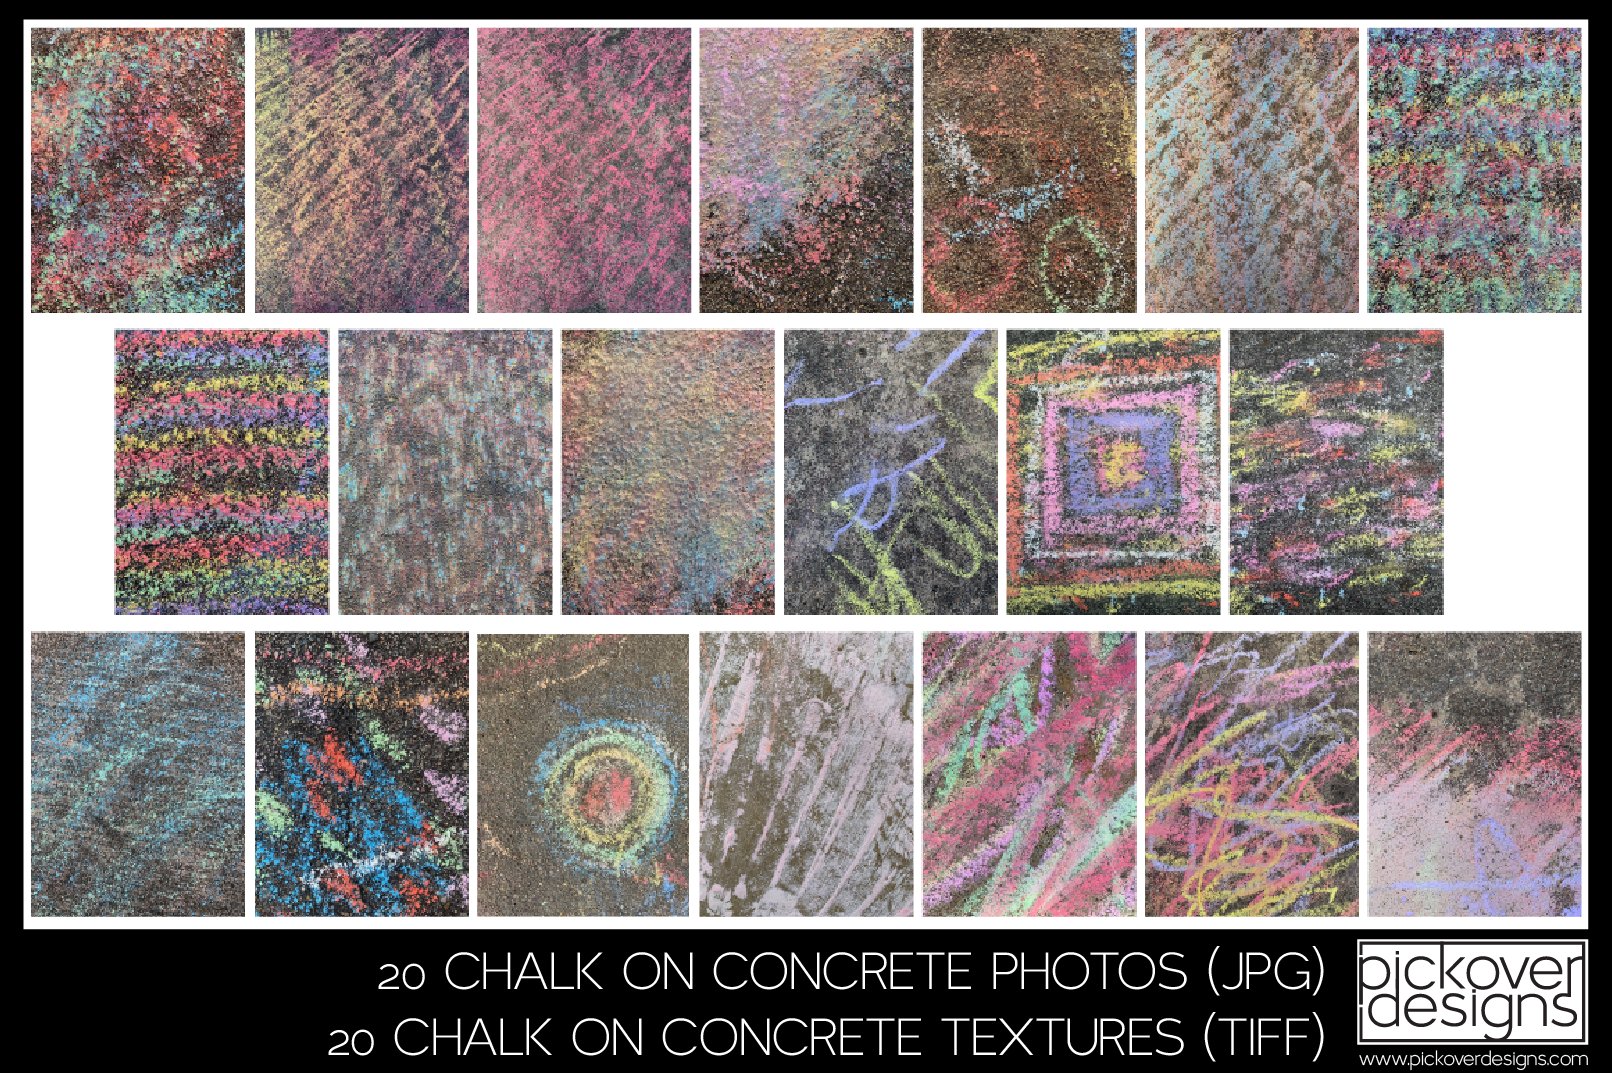 60 CHALK ON CONCRETE PHOTOS preview image.